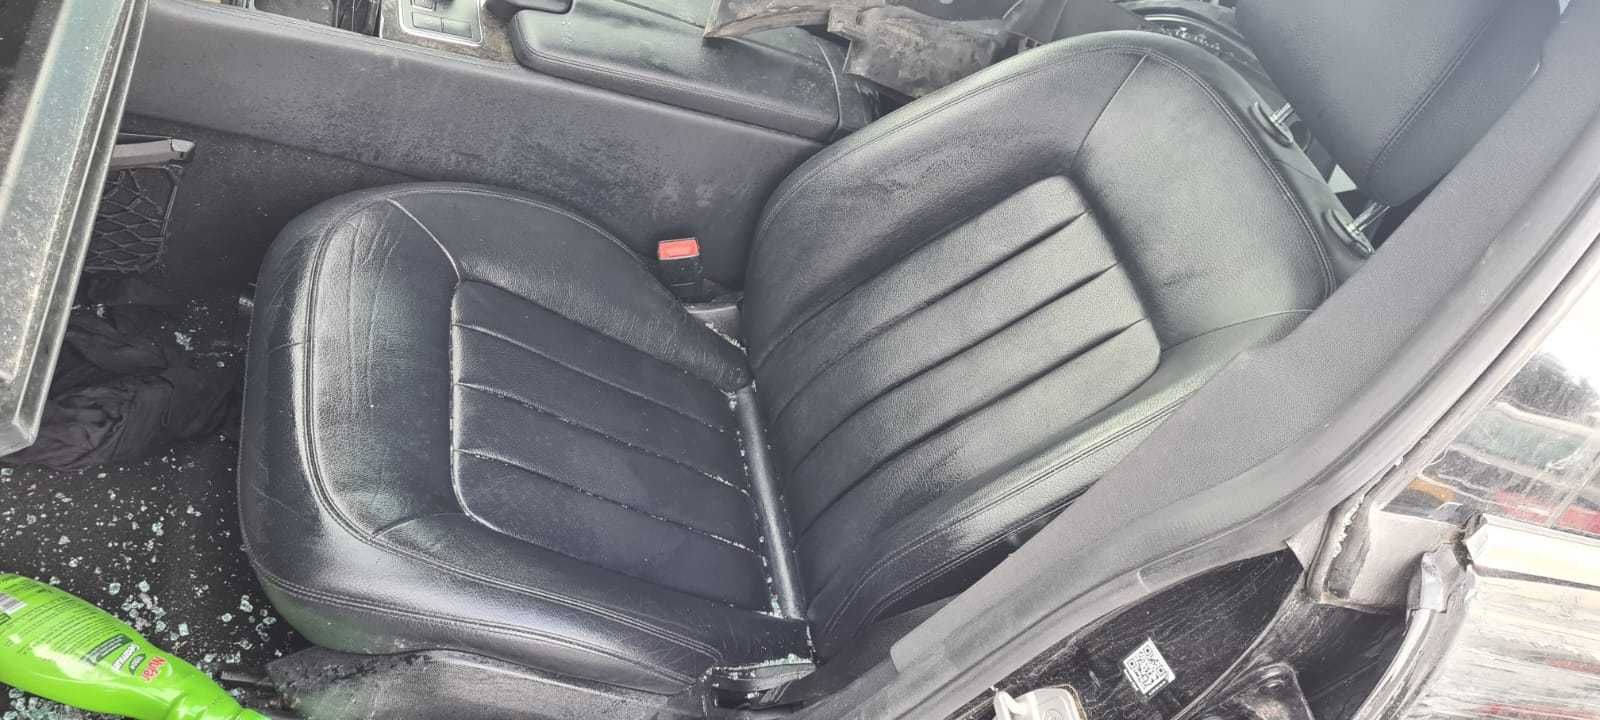 Interior complet piele (negru) Mercedes Cls w218 an 2011-2016